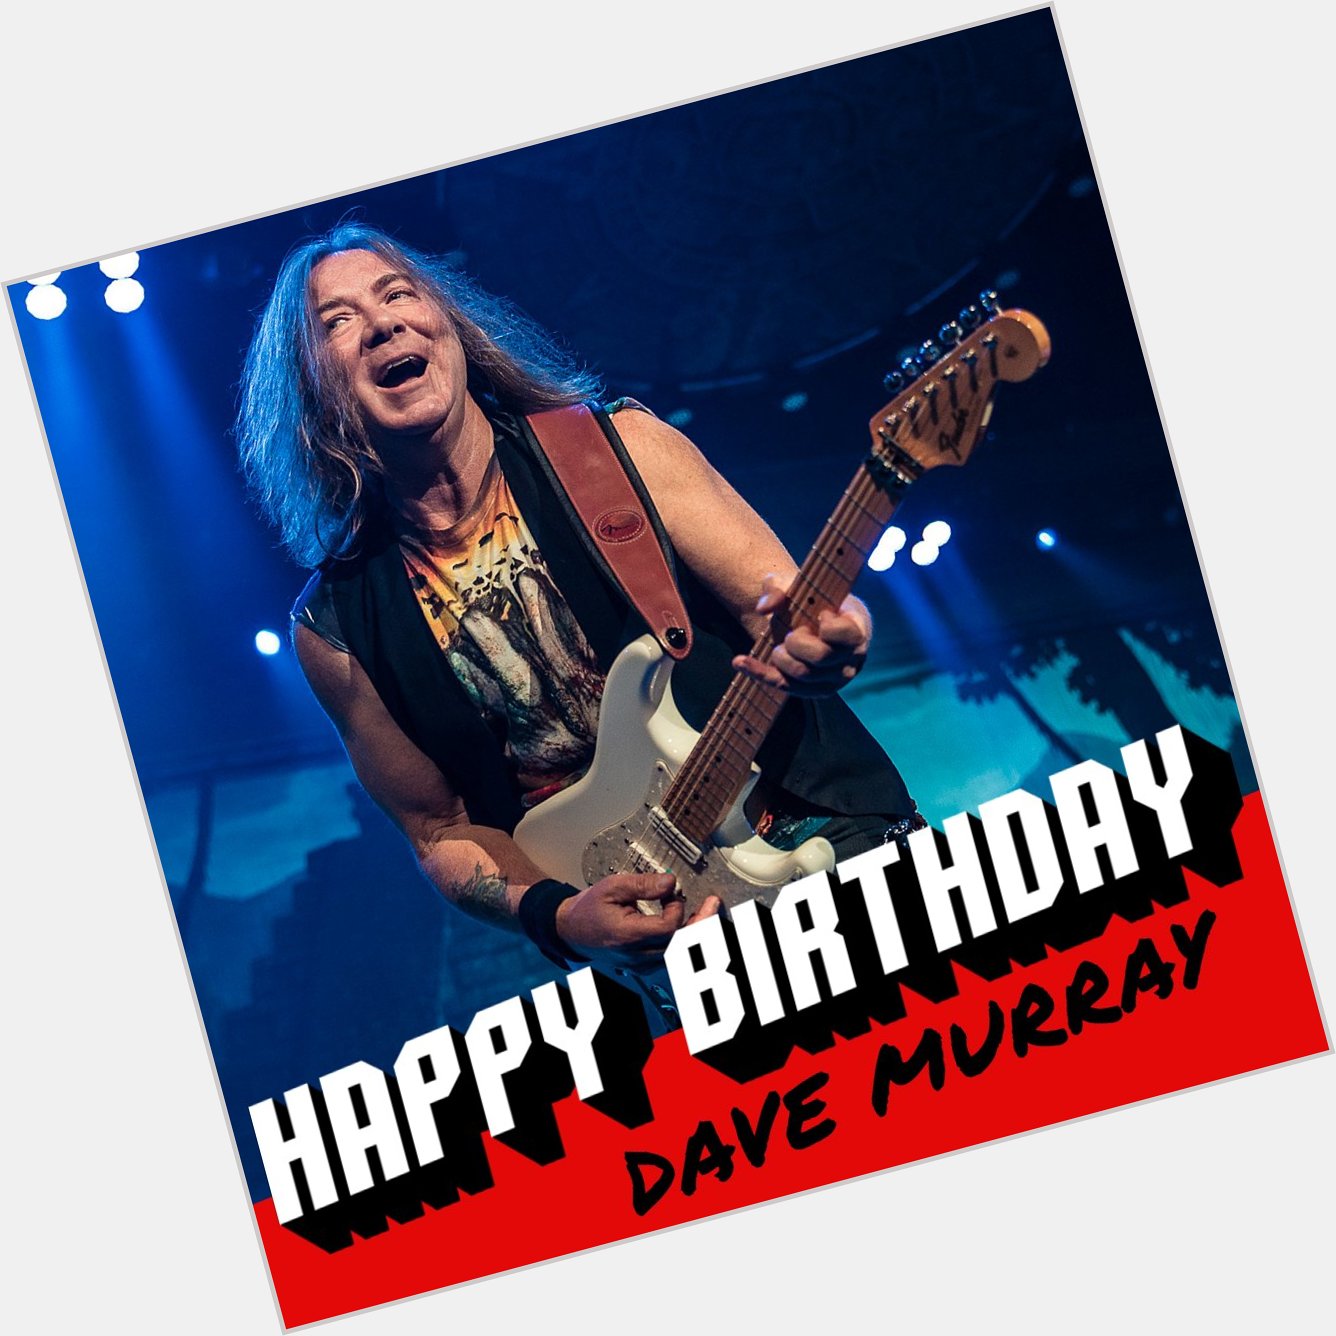 A very happy birthday to Dave Murray!  